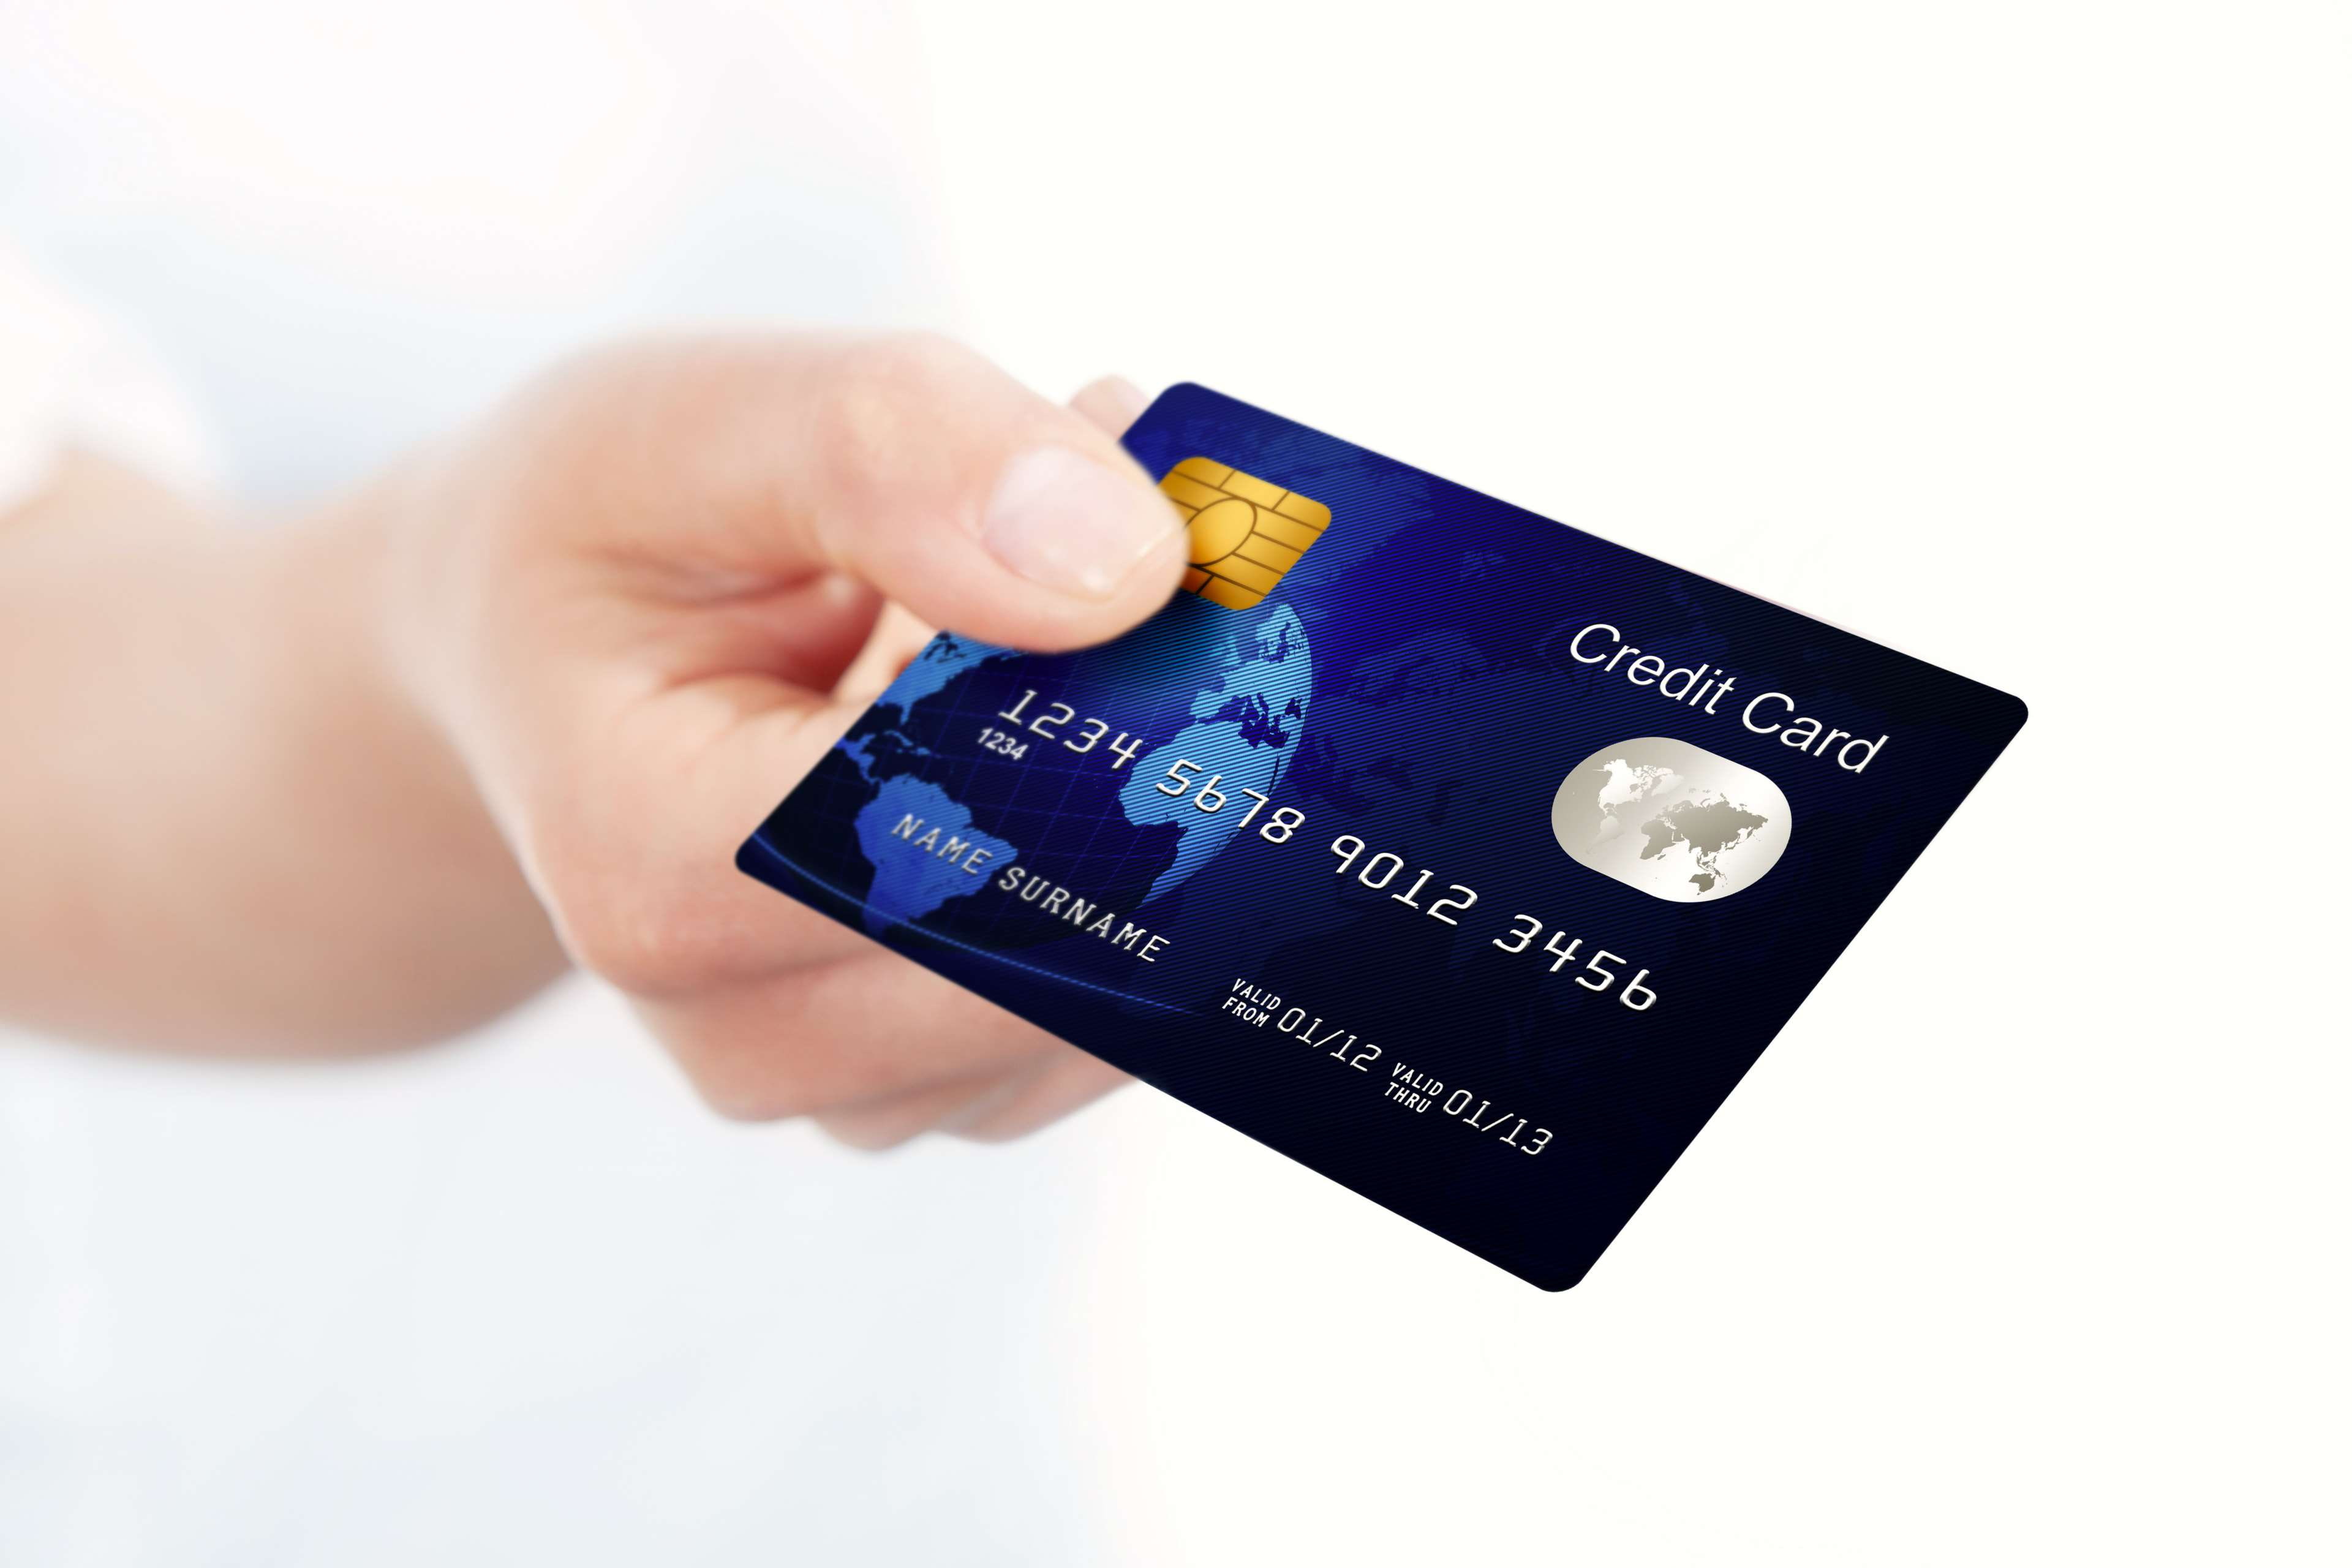 atm, atm card, credit card, human hand, finance, human body part